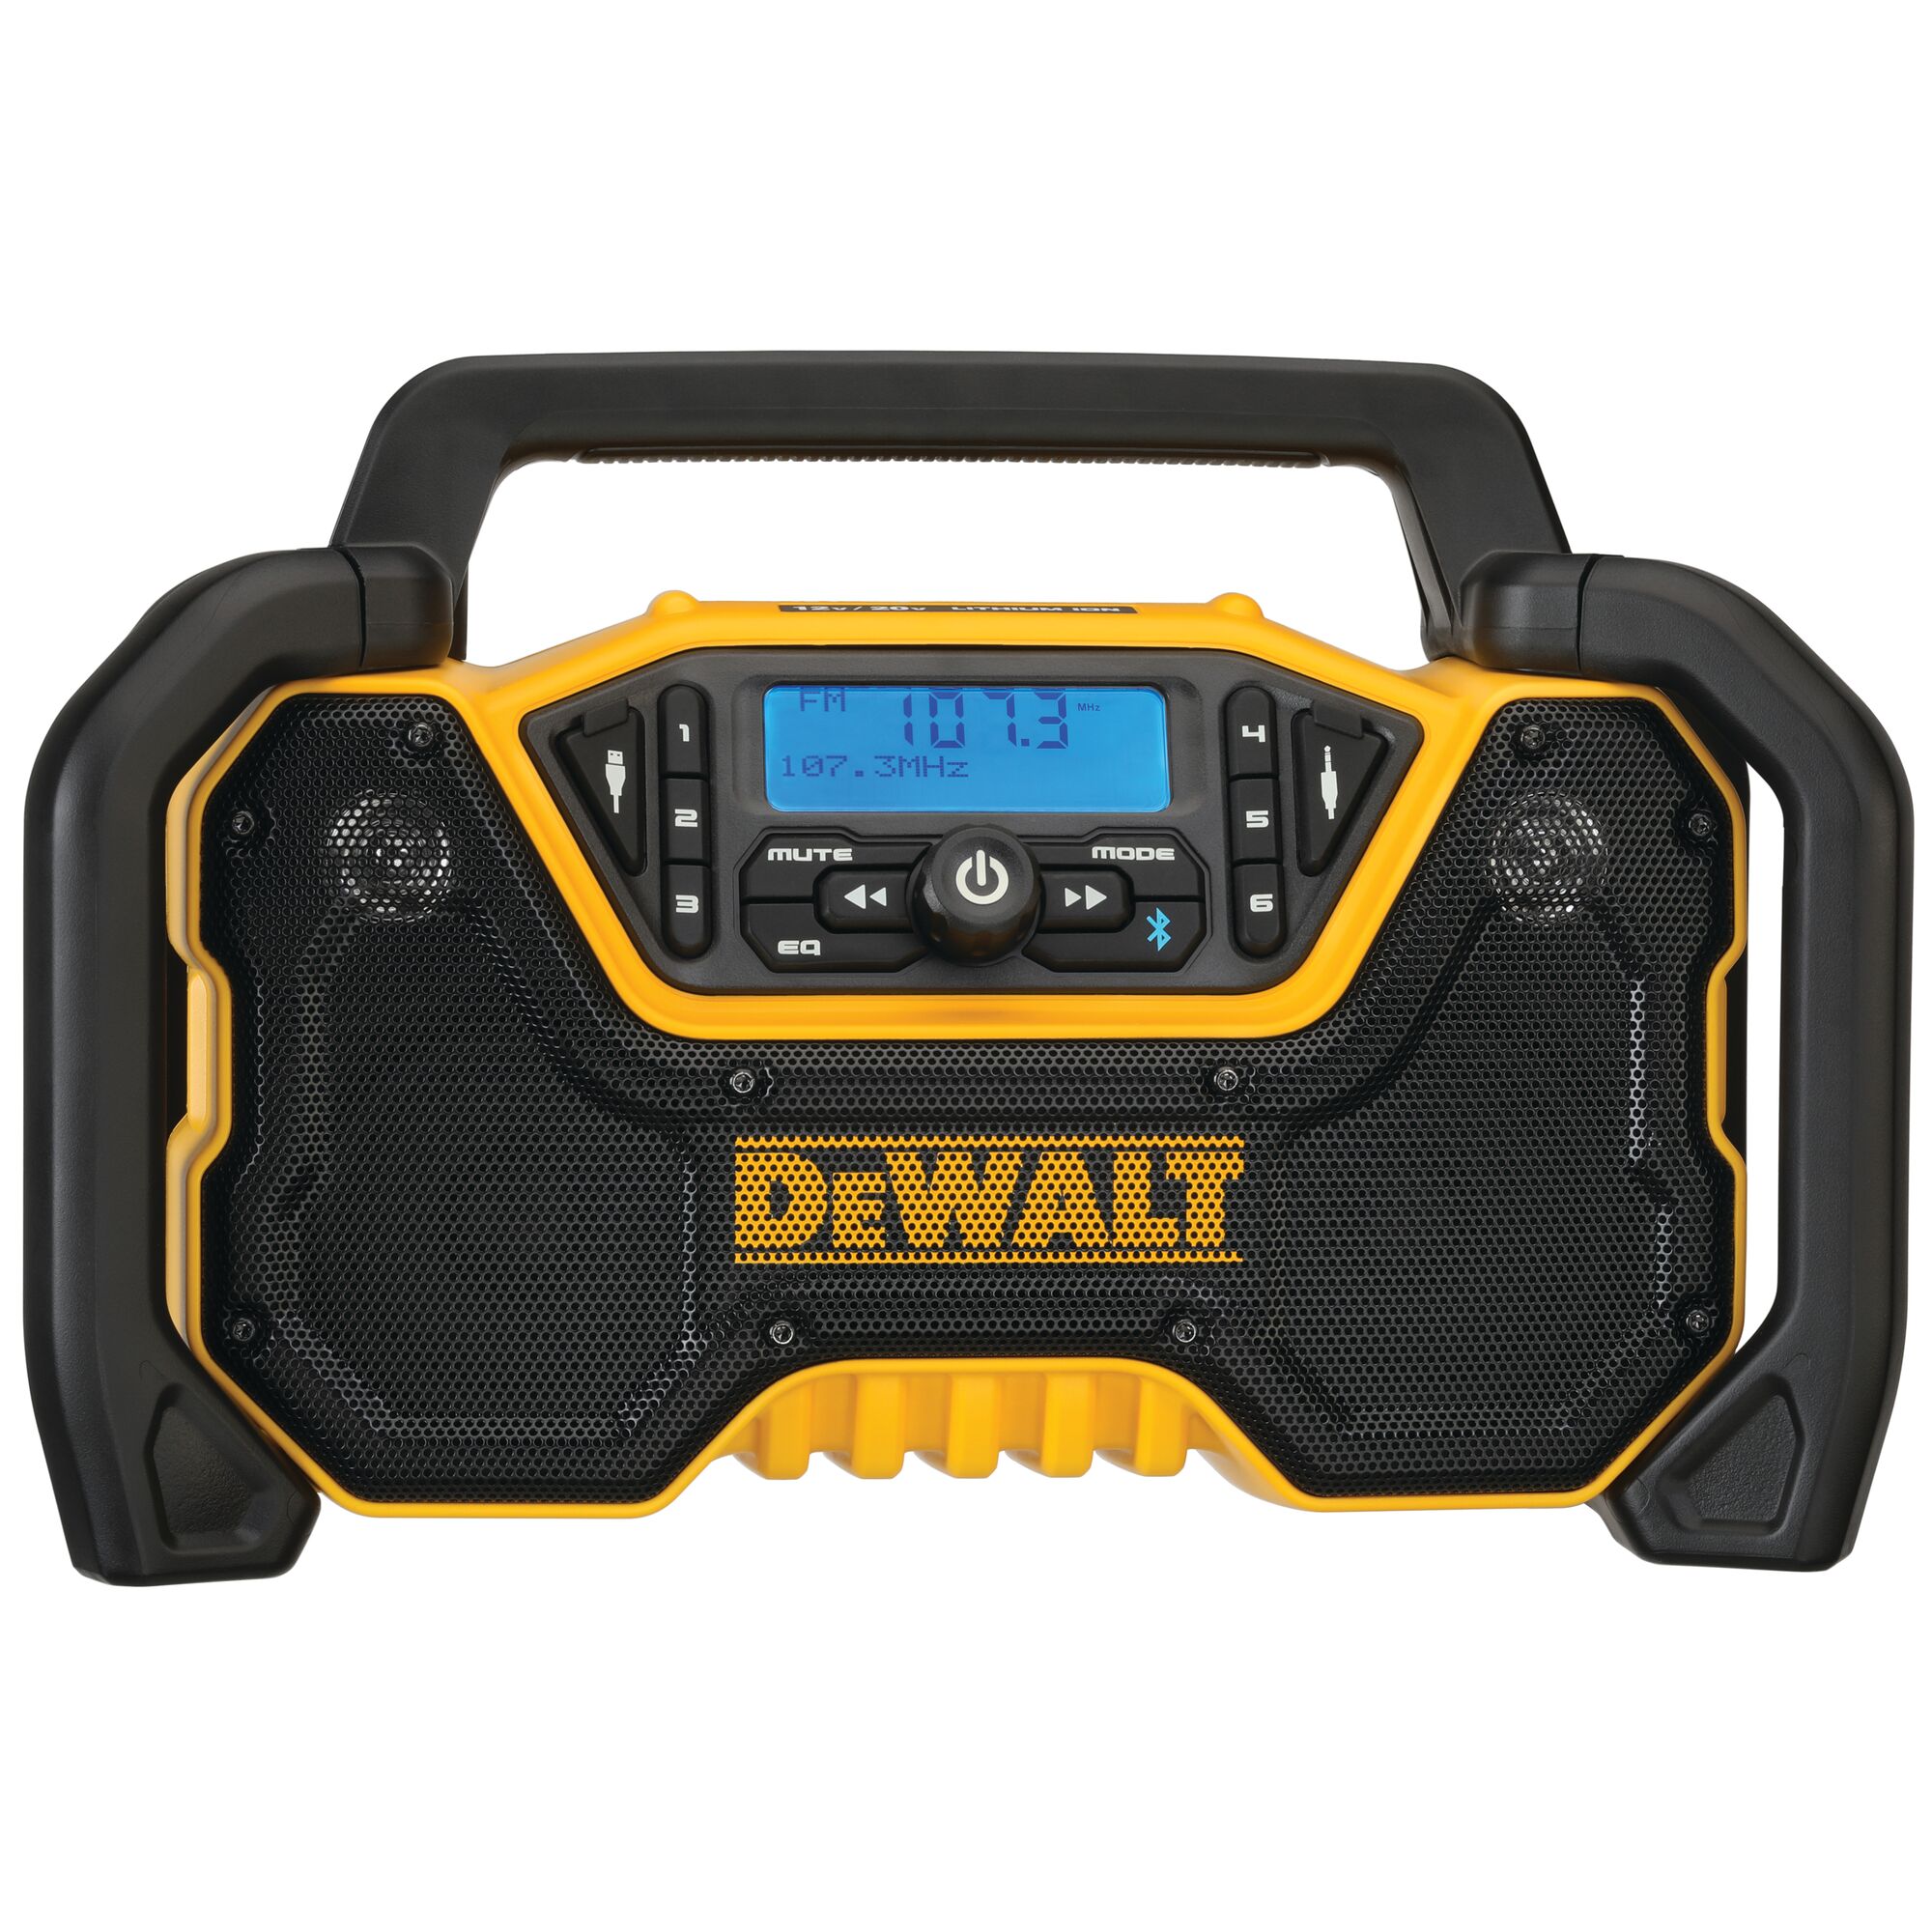 DEWALT 12-volt or 20-volt Max Water Resistant Cordless Bluetooth  Compatibility Jobsite Radio Bluetooth Adapter